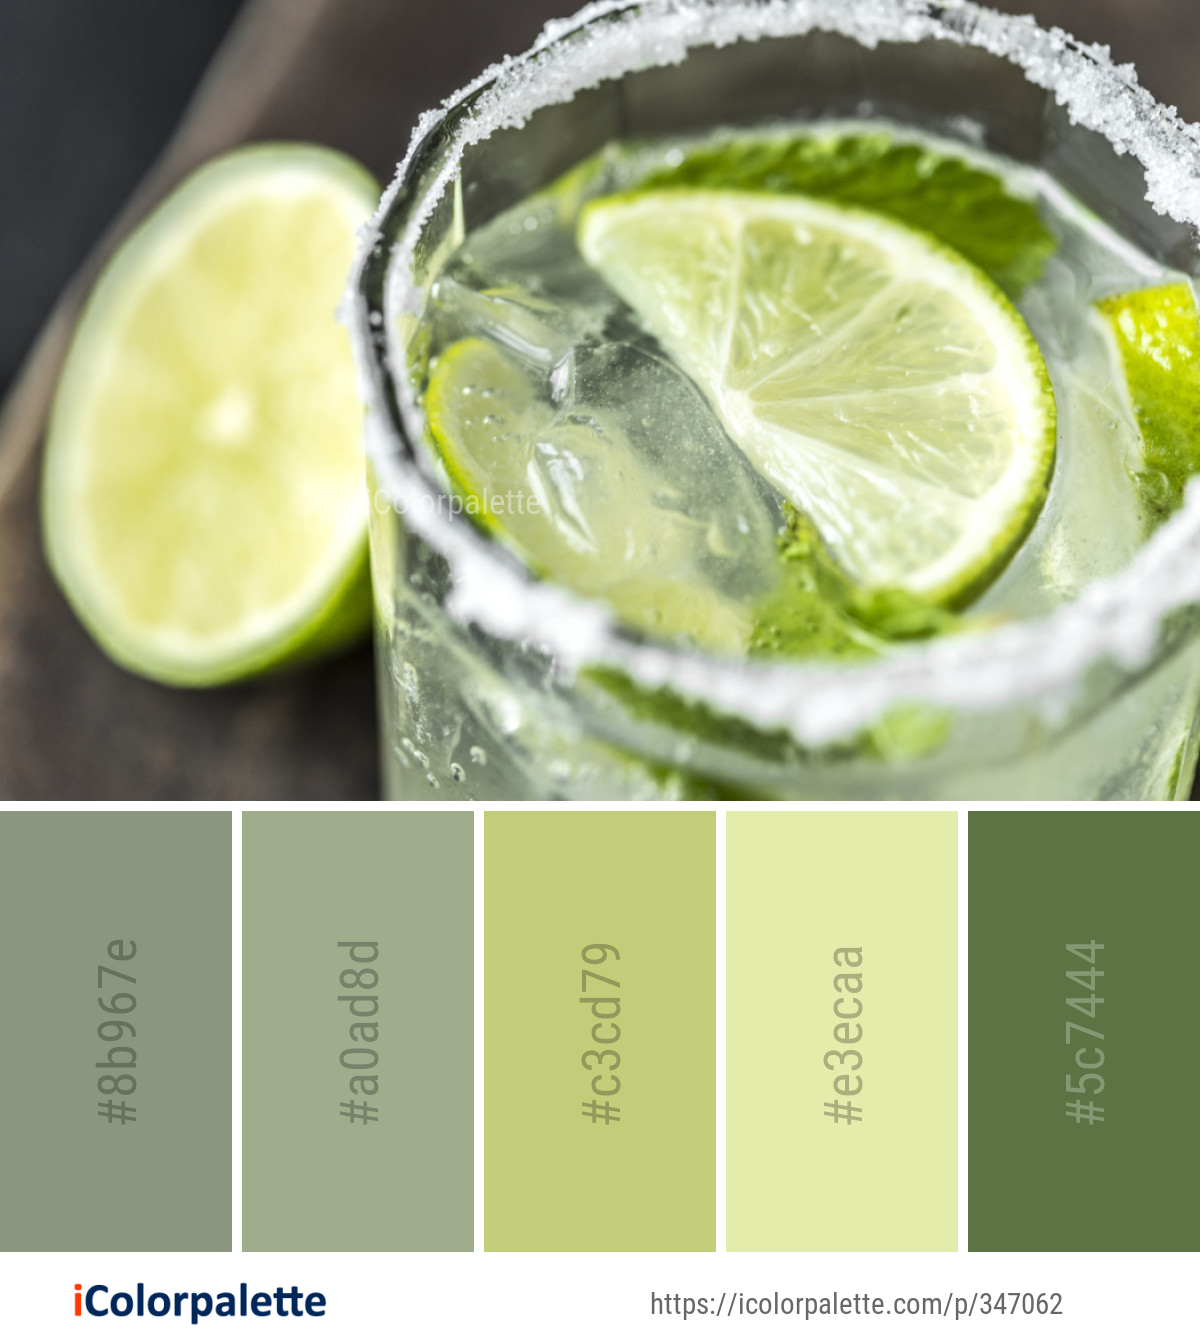 Color Palette Ideas from Lime Drink Caipirinha Image